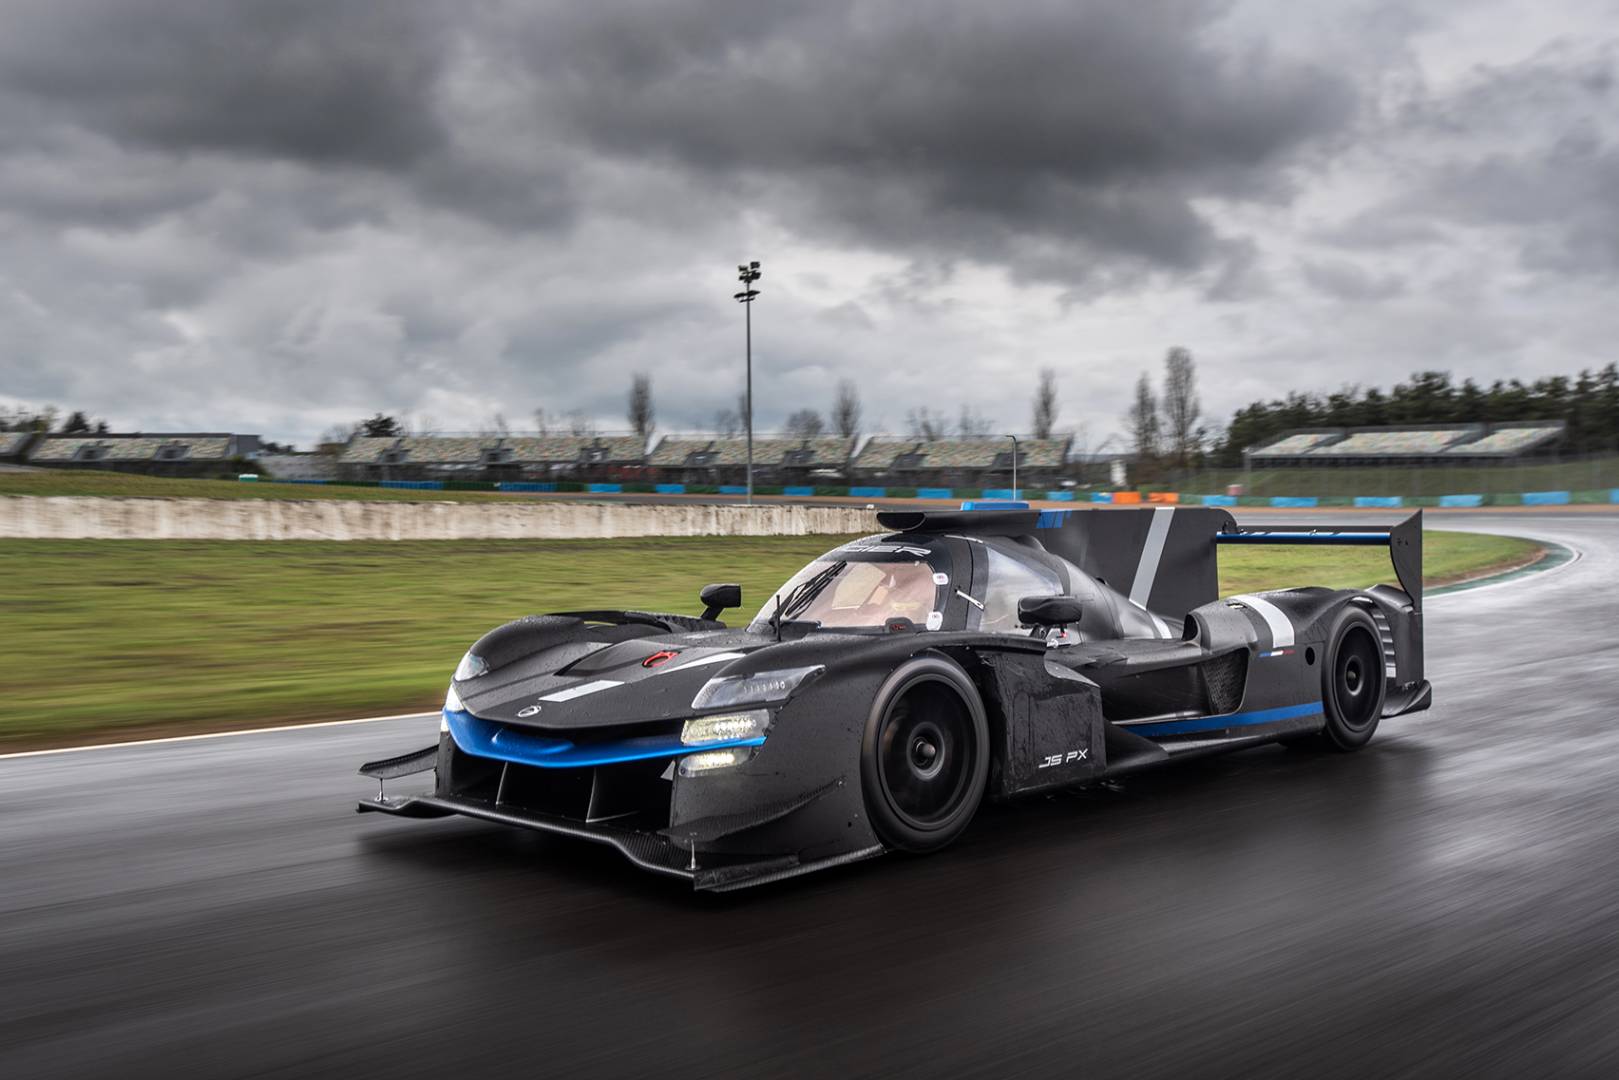 The Ligier JS PX stars in Gran Turismo film! - Ligier Automotive